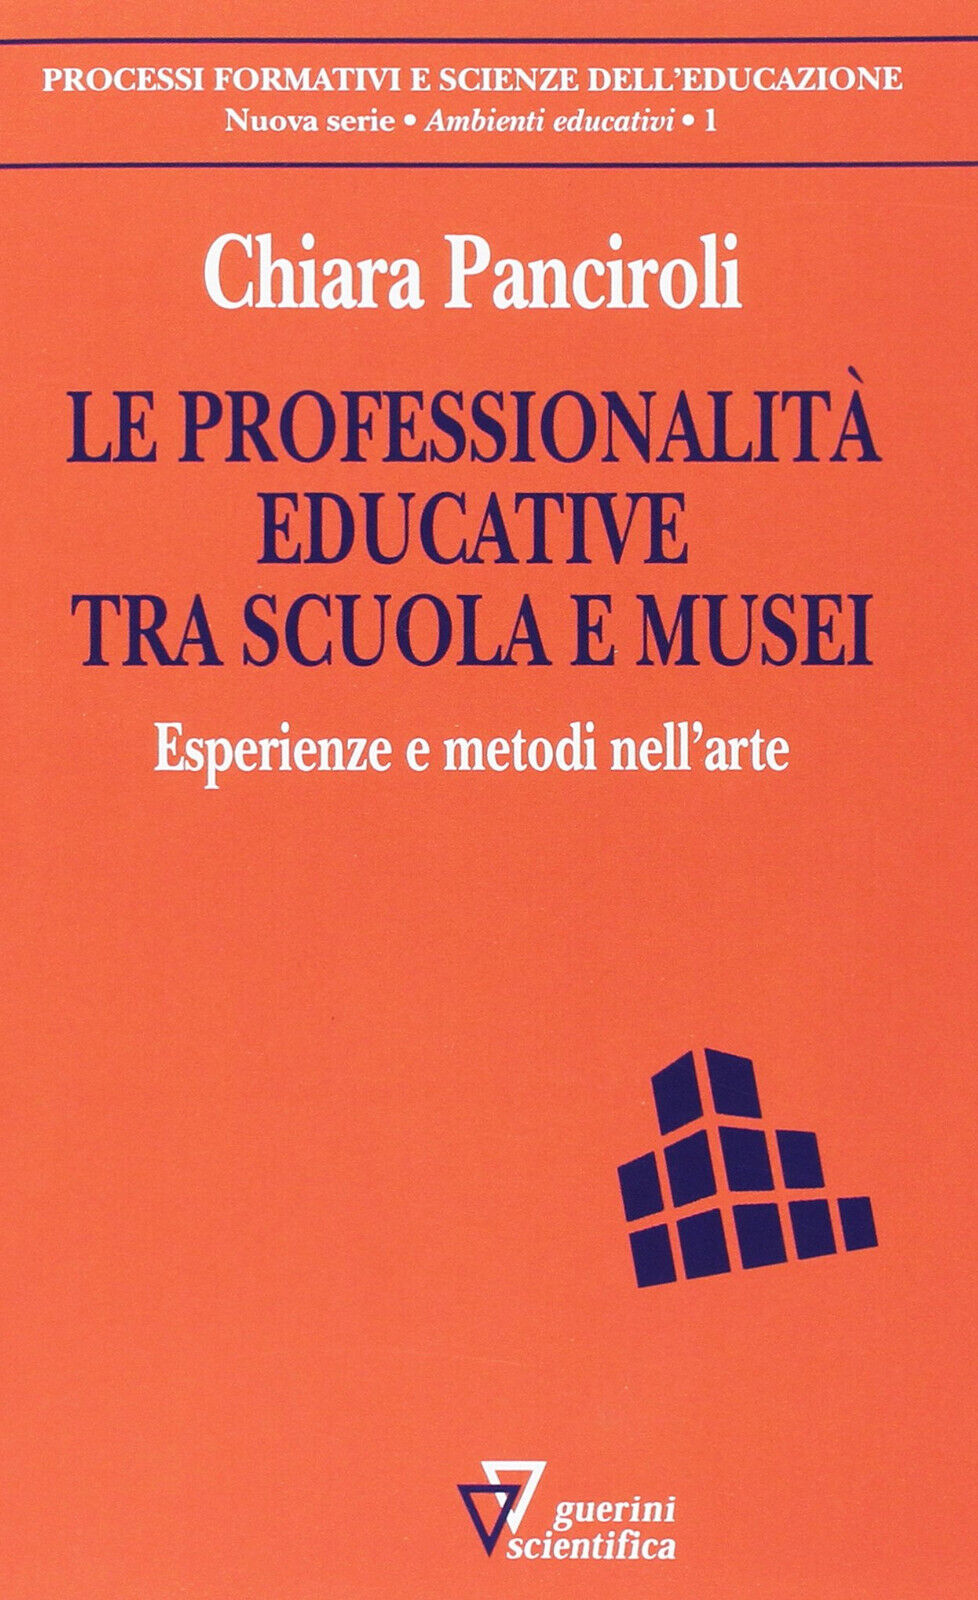 Le professionalit? educative tra scuola e musei - Chiara Panciroli-Guerini, 2016 libro usato